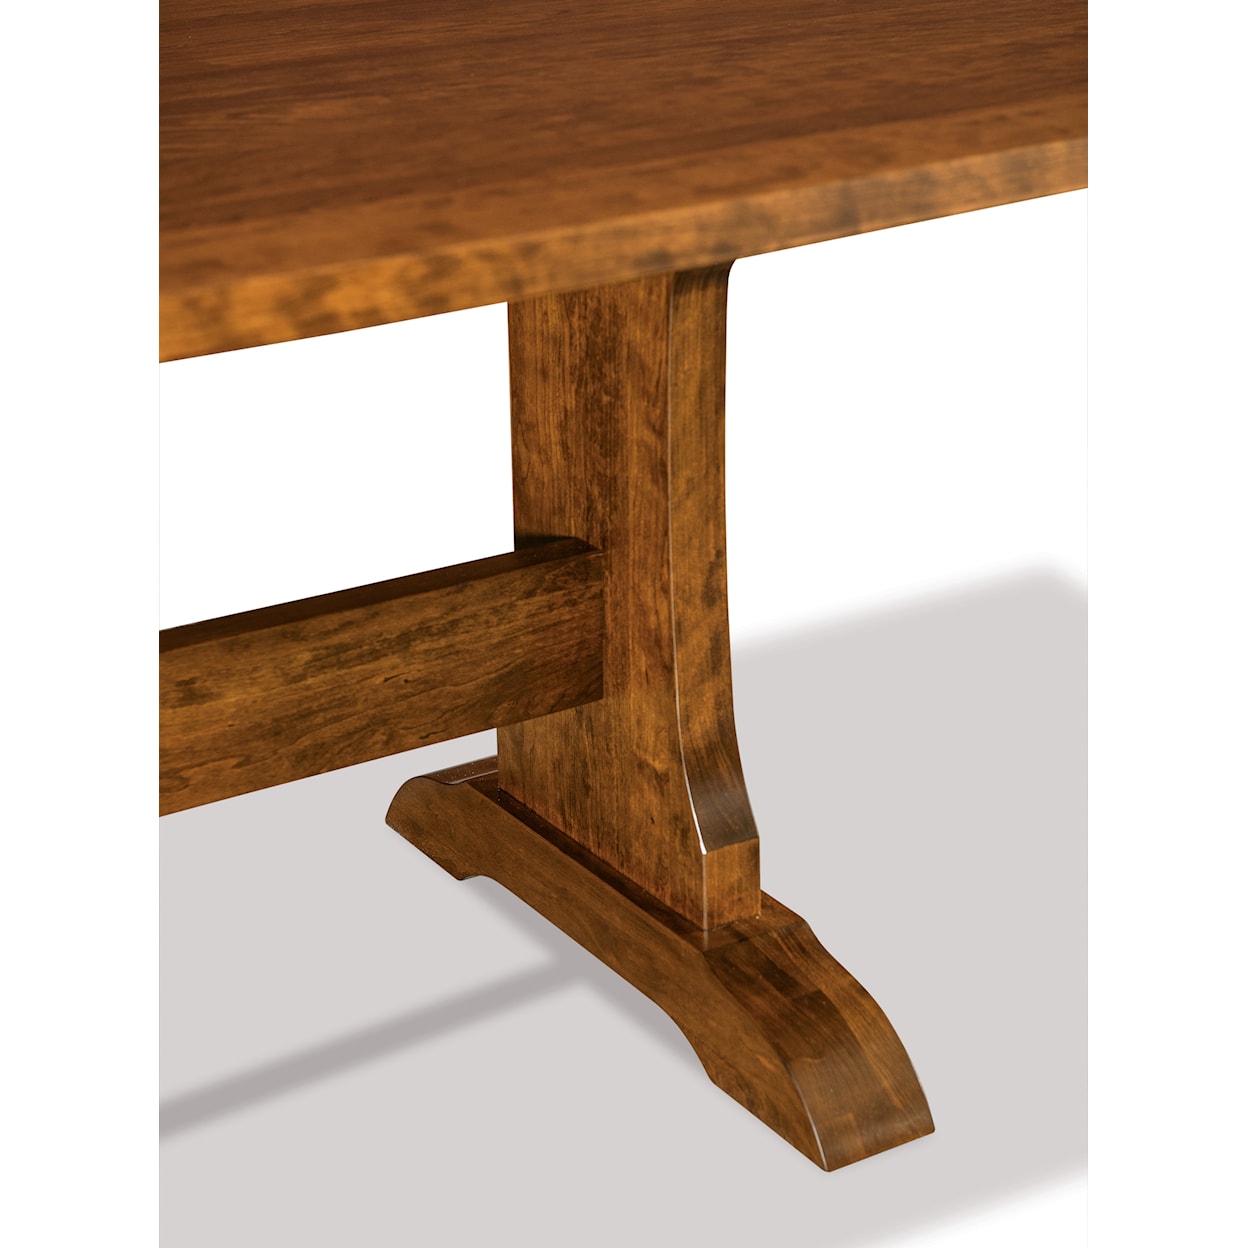 Archbold Furniture Bob Timberlake 36x72 Signature Solid Top Trestle Table